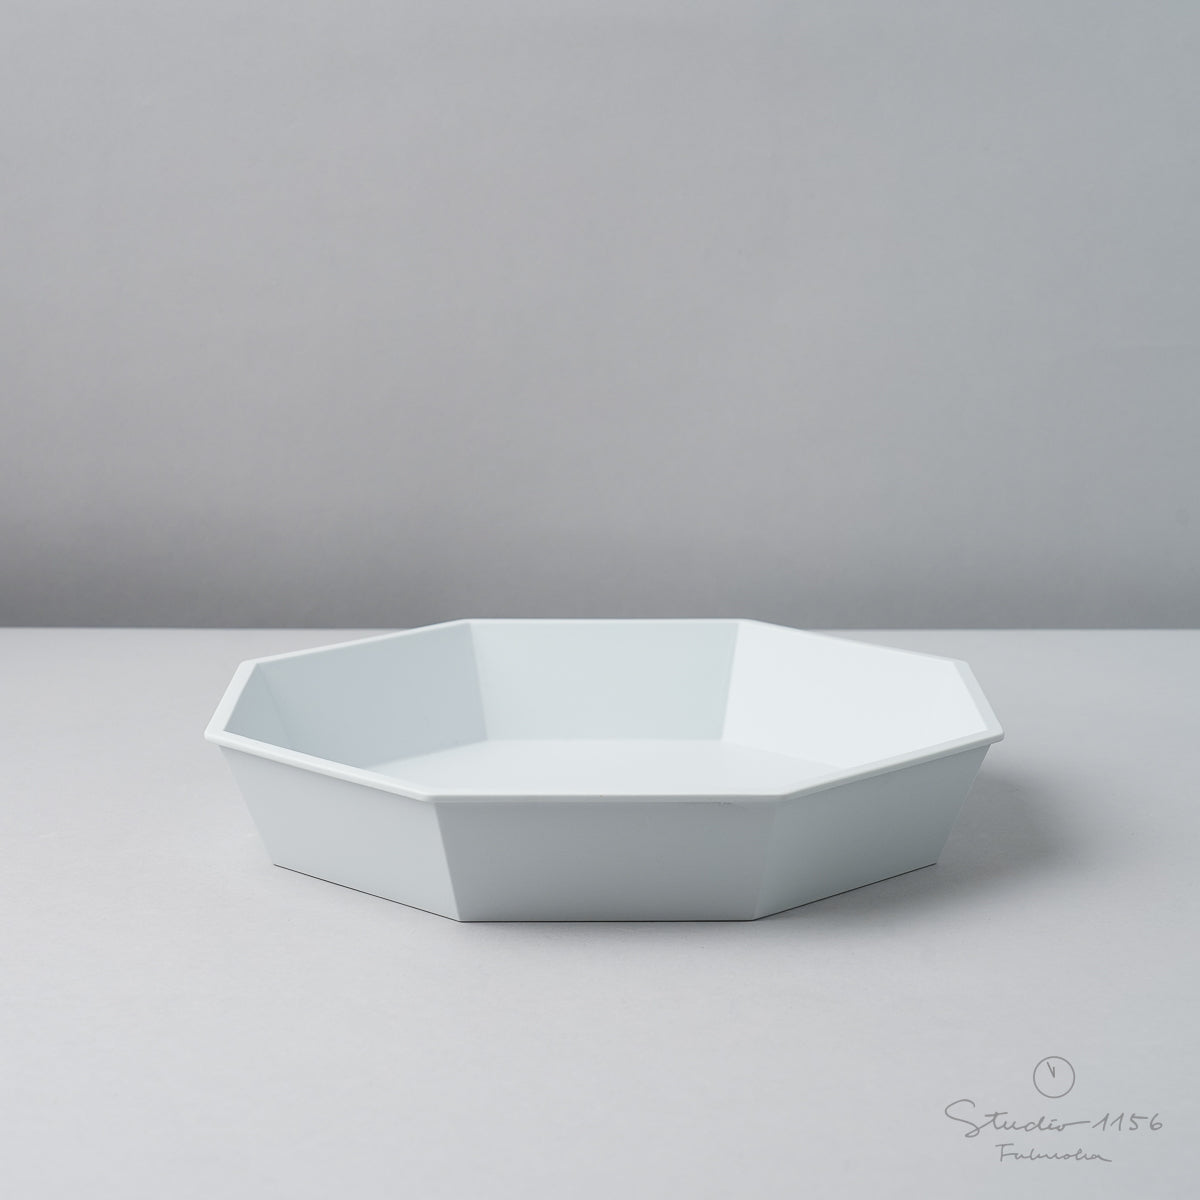 有田焼 TY "Standard" Anise Bowl Grey 150/220 220 1616 / Arita Japan Studio1156